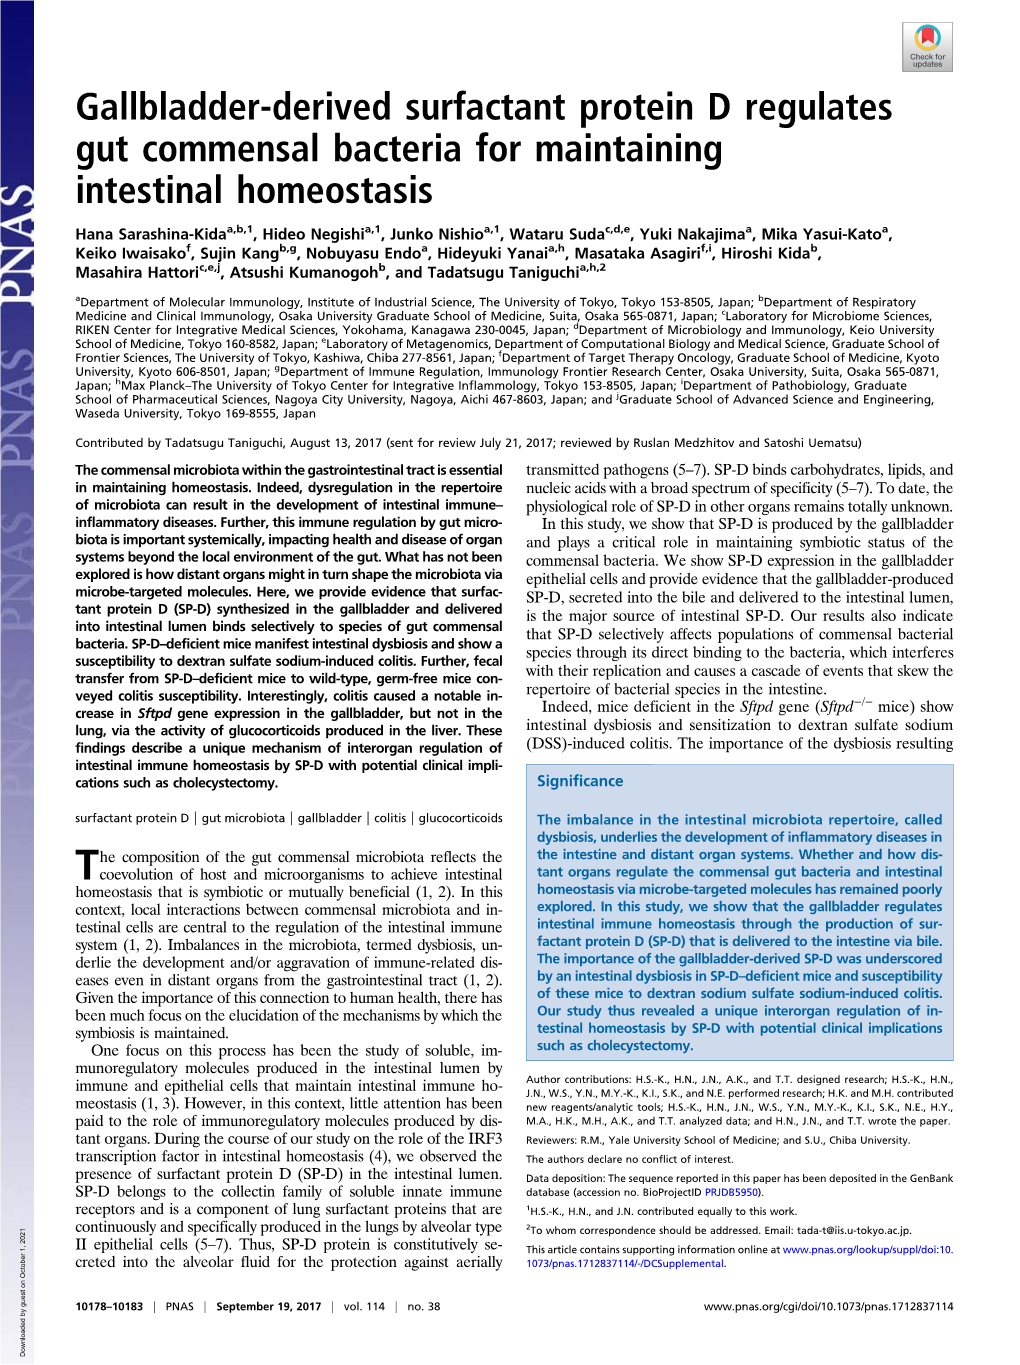 Gallbladder-Derived Surfactant Protein D Regulates Gut Commensal Bacteria for Maintaining Intestinal Homeostasis